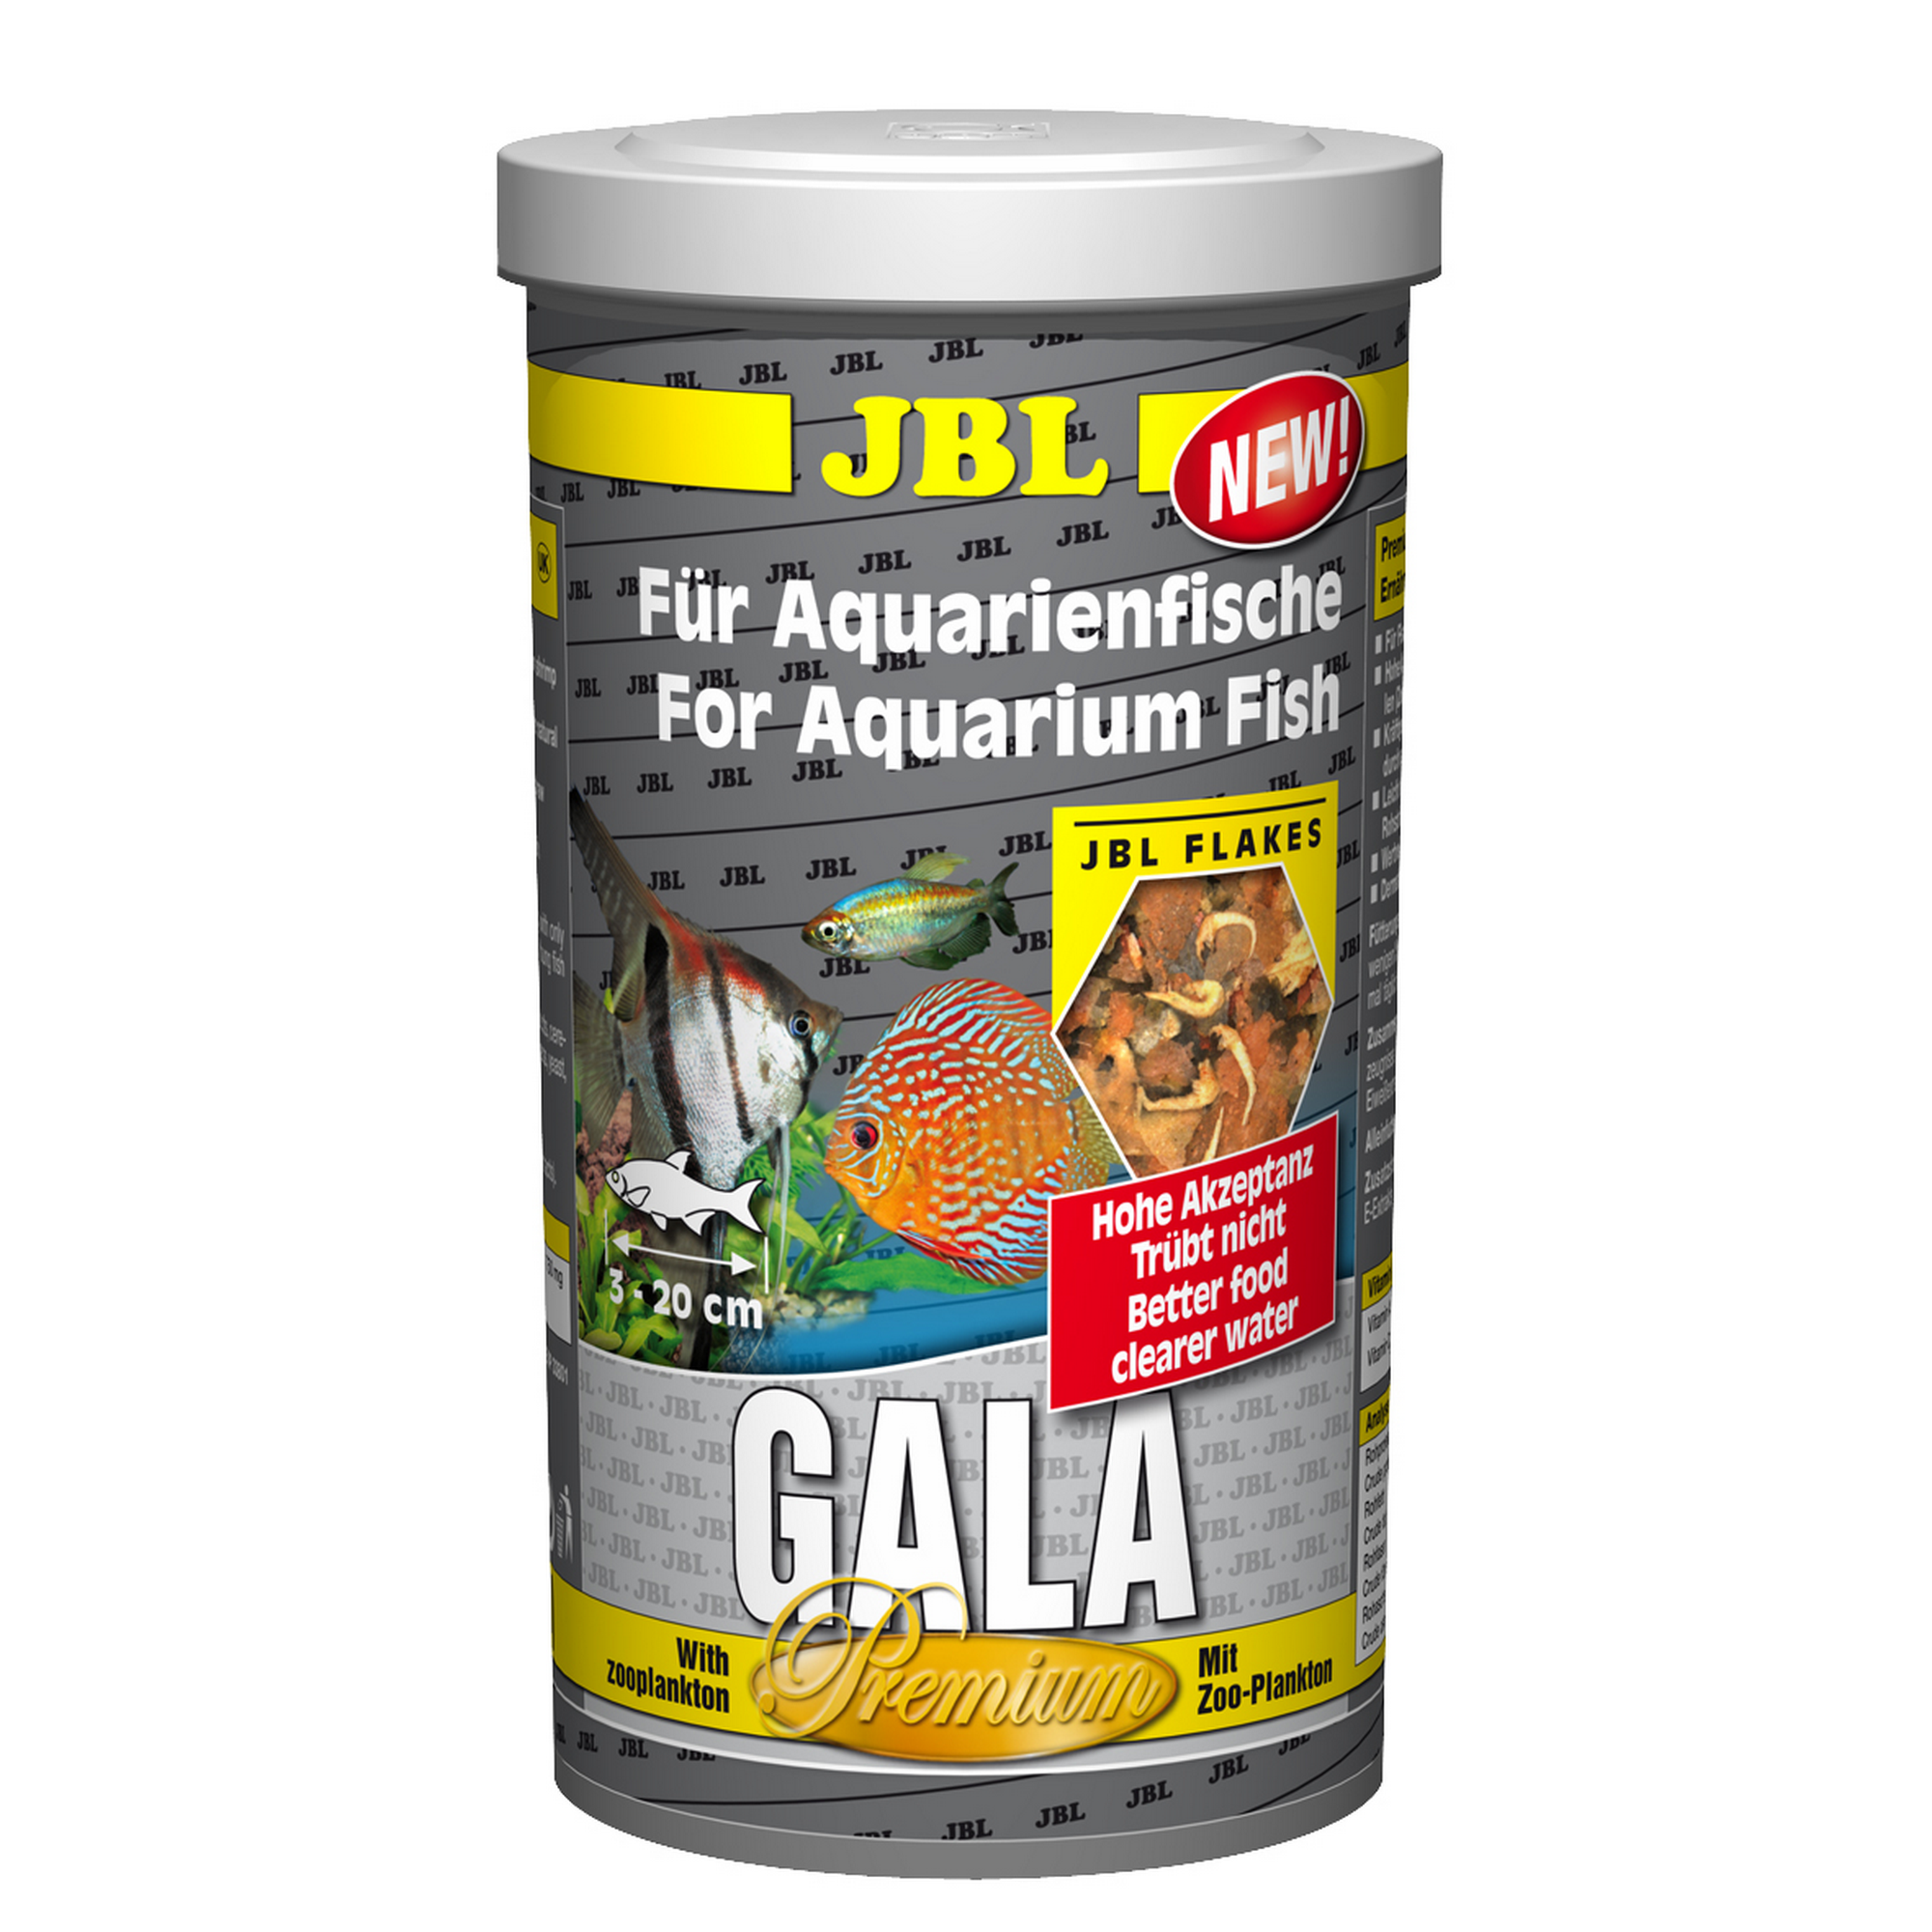 Gala Premium Für Aquarienfische 1 l + product picture